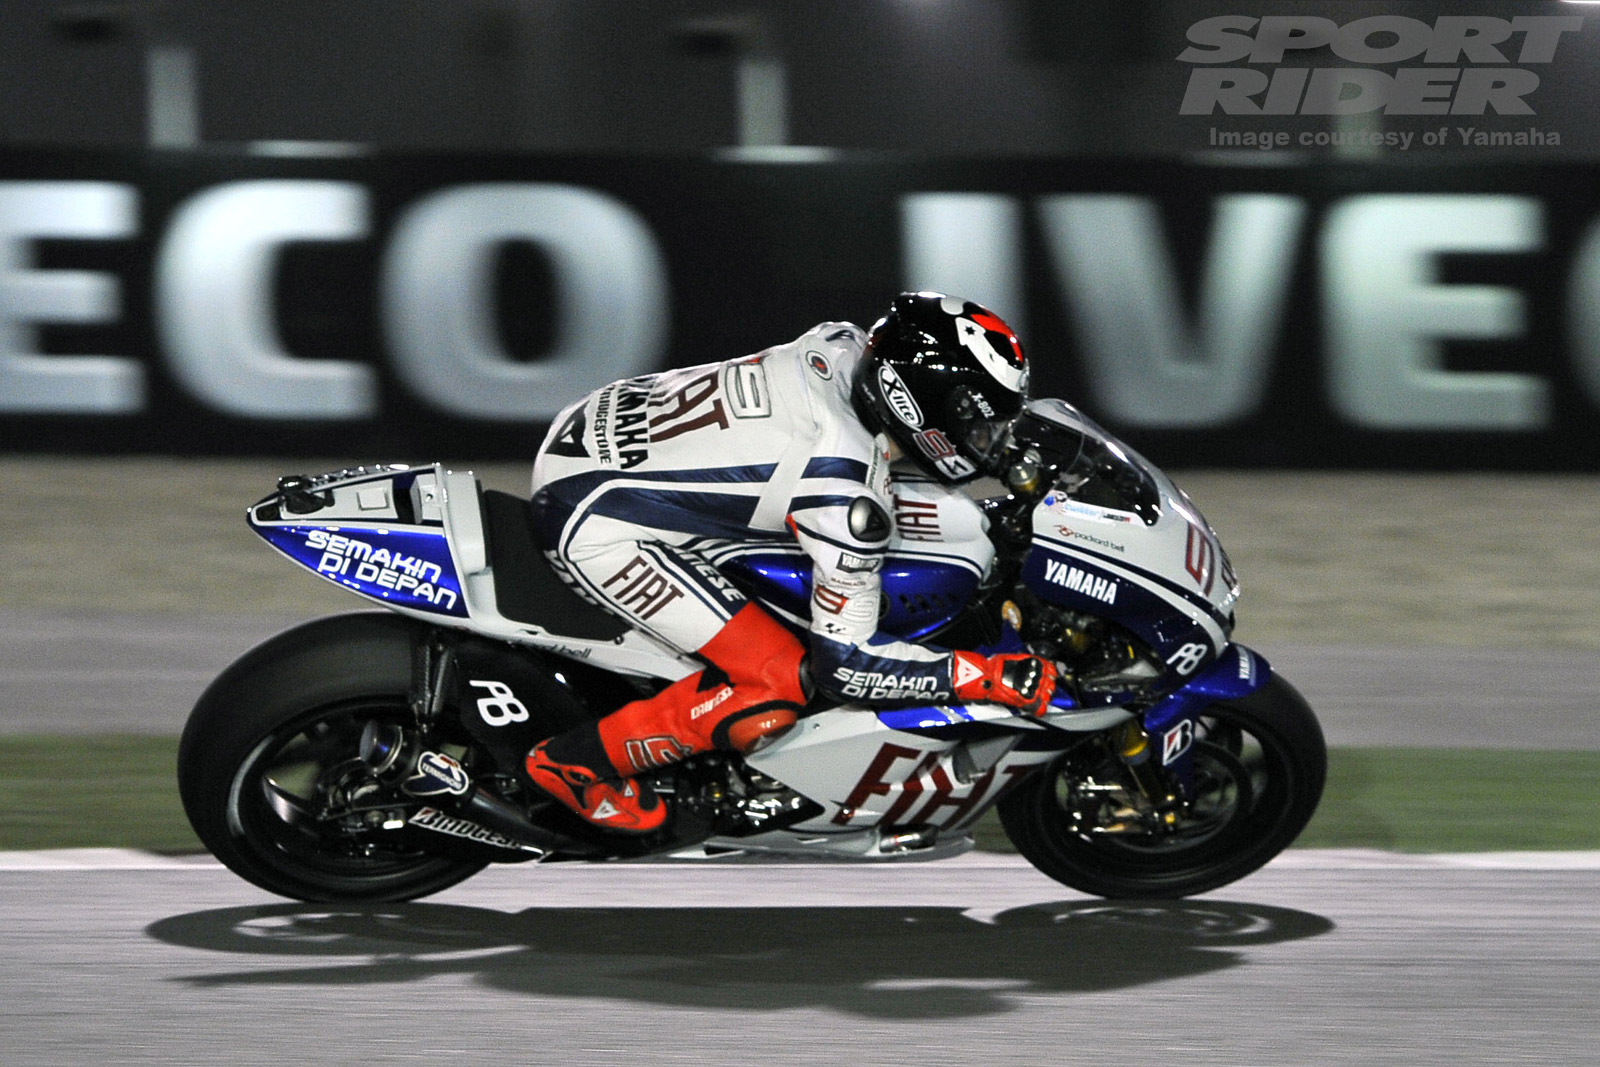 jorge lorenzo wallpaper,motorsport,motorcycle racer,superbike racing,motorcycle,vehicle